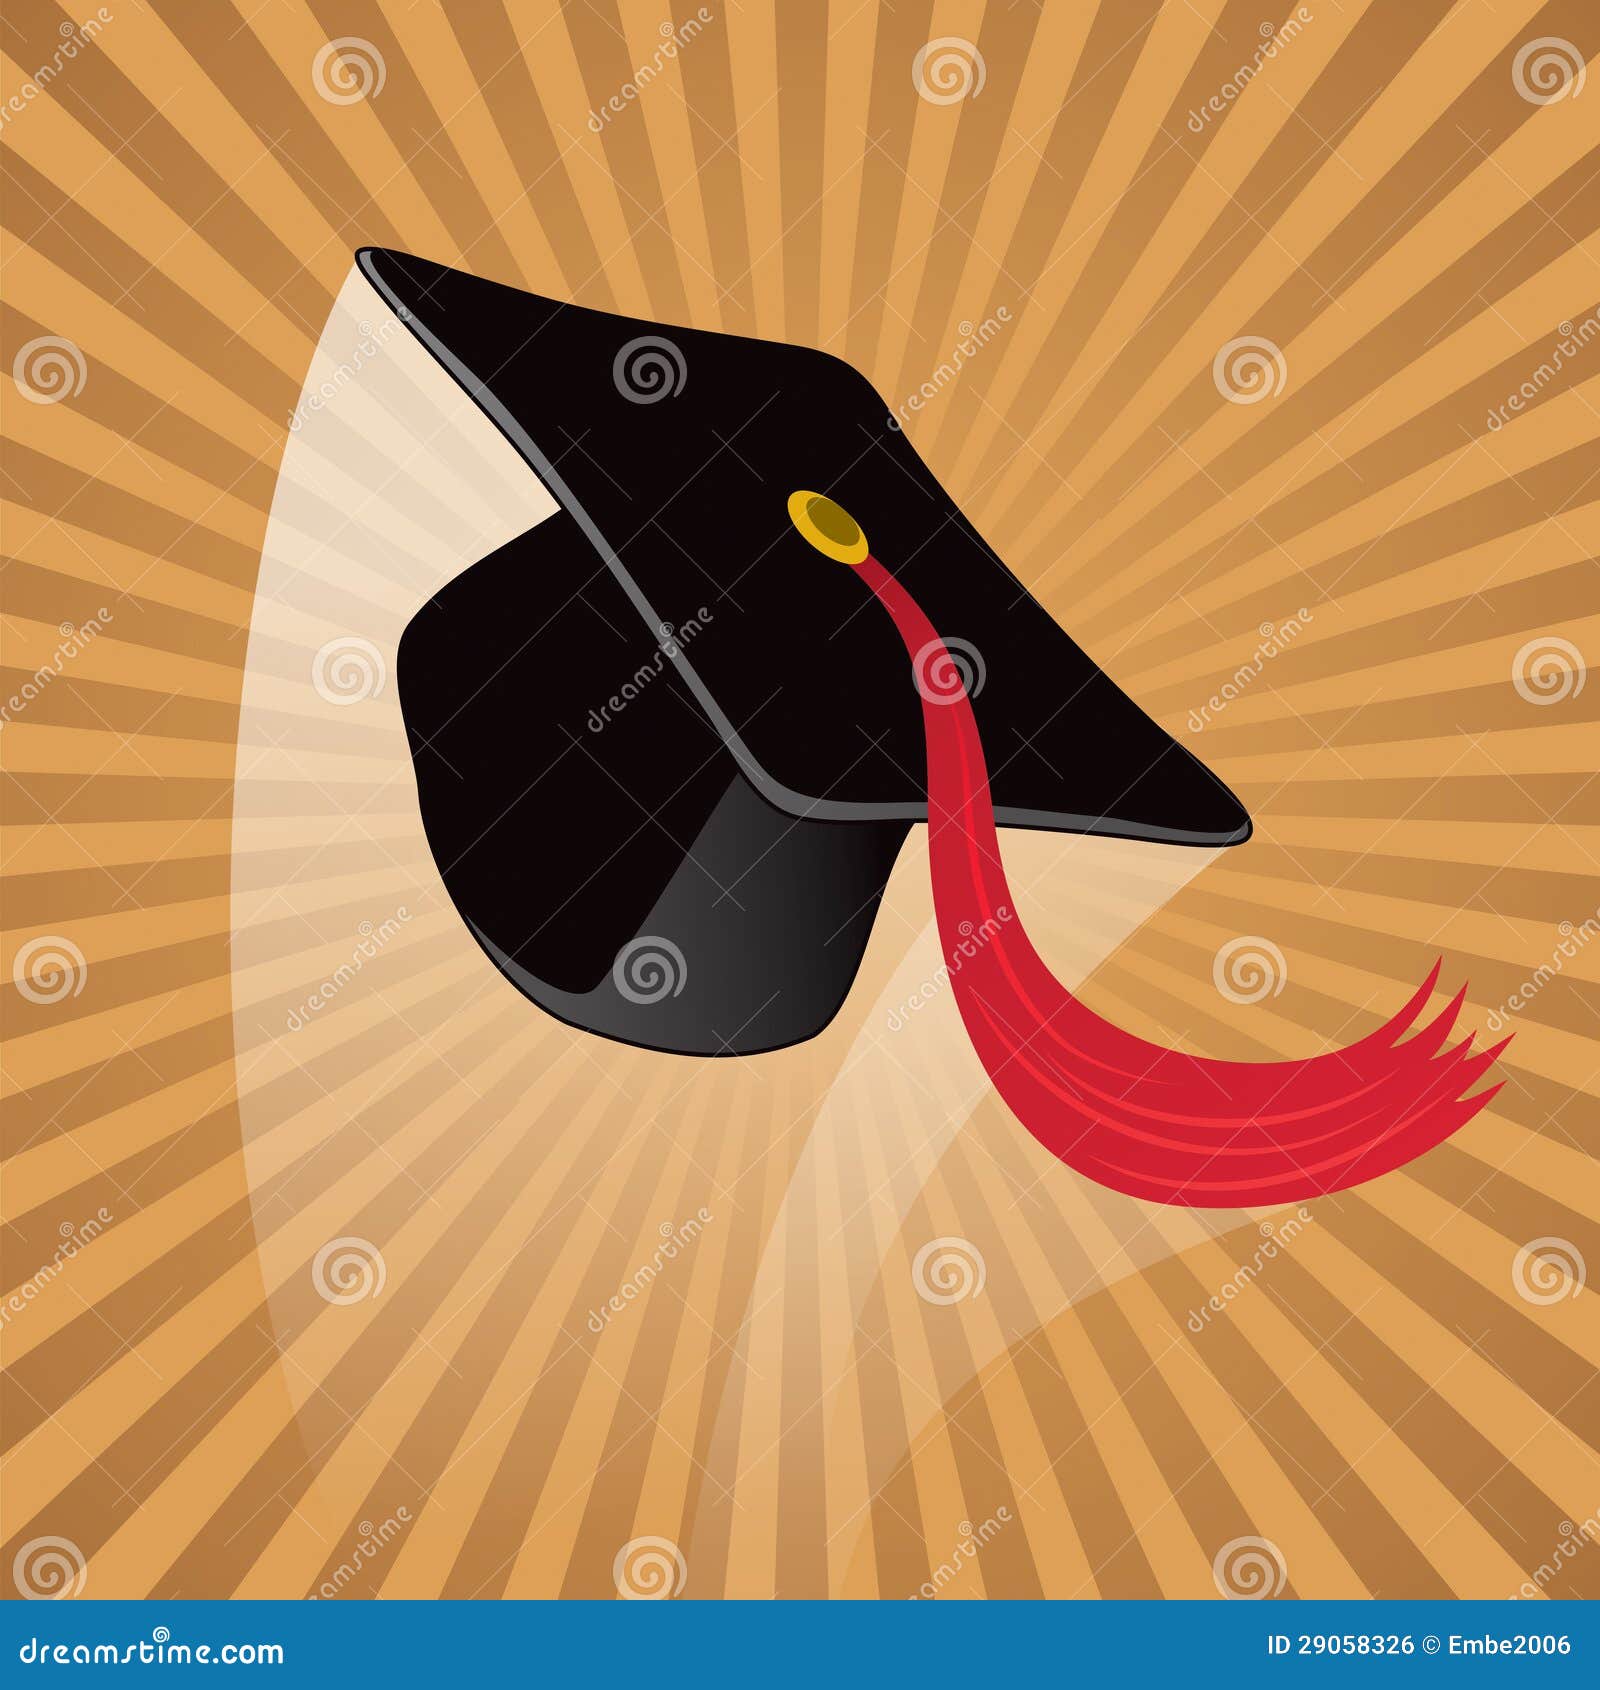 Graduation Hat Royalty Free Stock Image - Image: 29058326